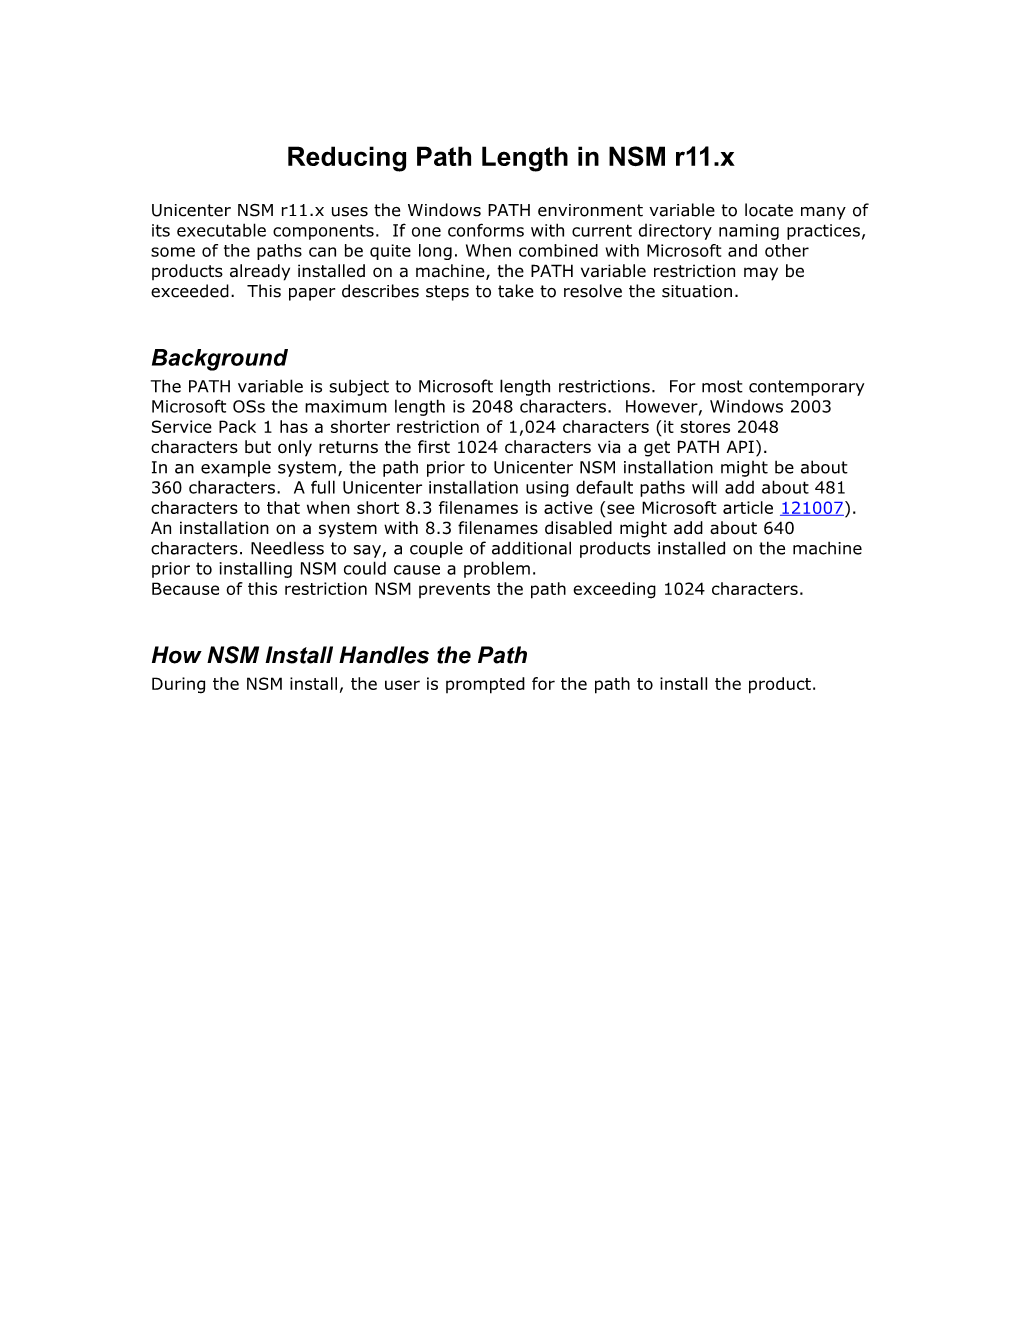 Reducing Path Length in NSM R11.X